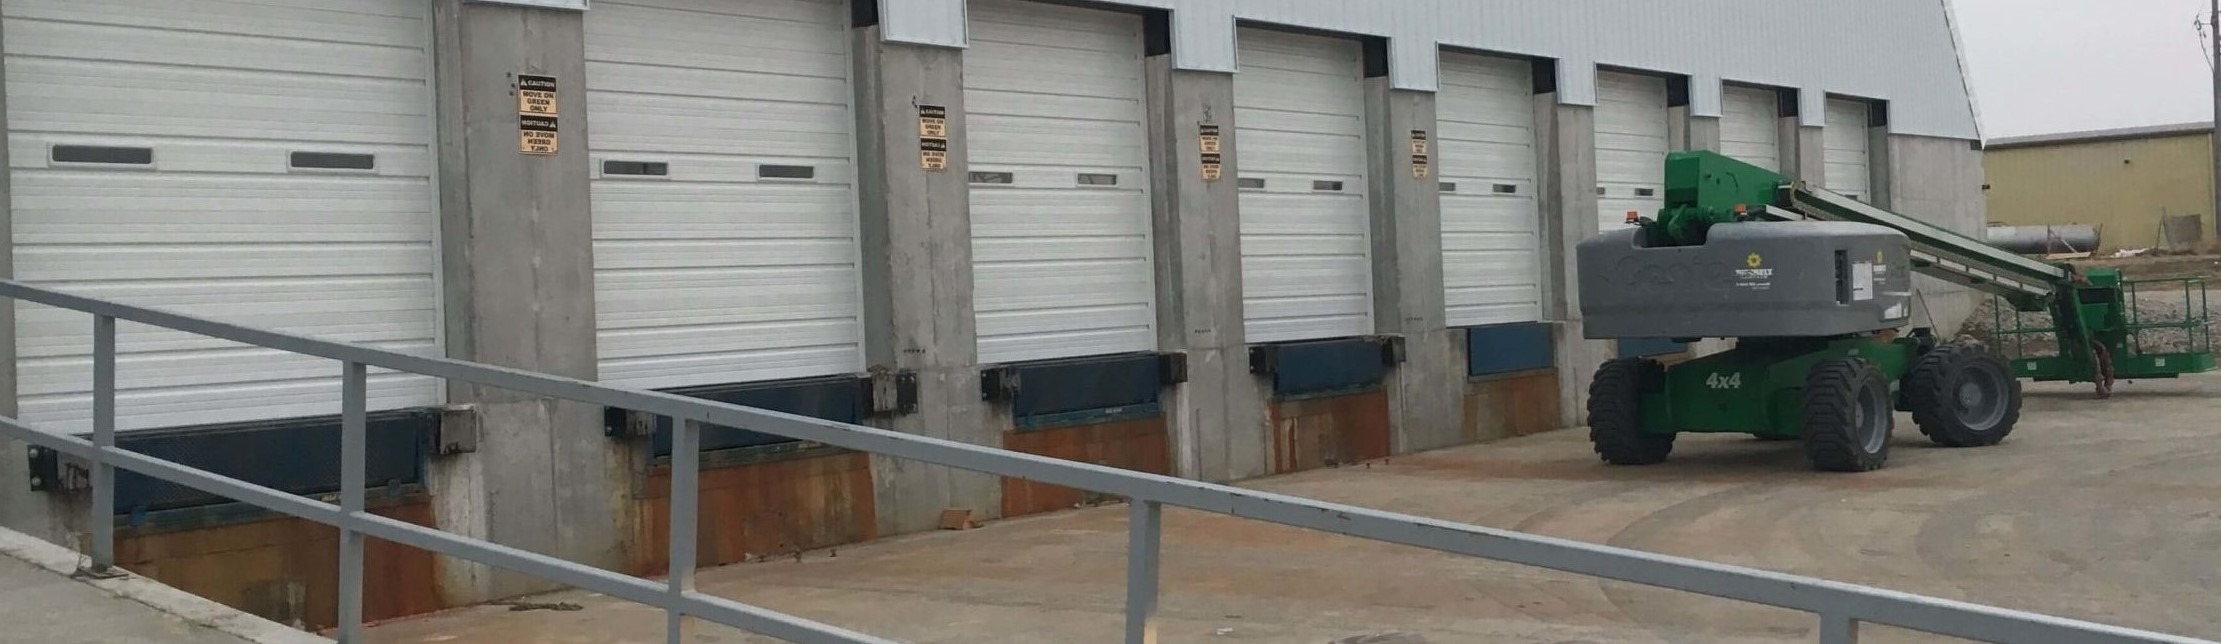 8 loading docks installed in Omaha Nebraska